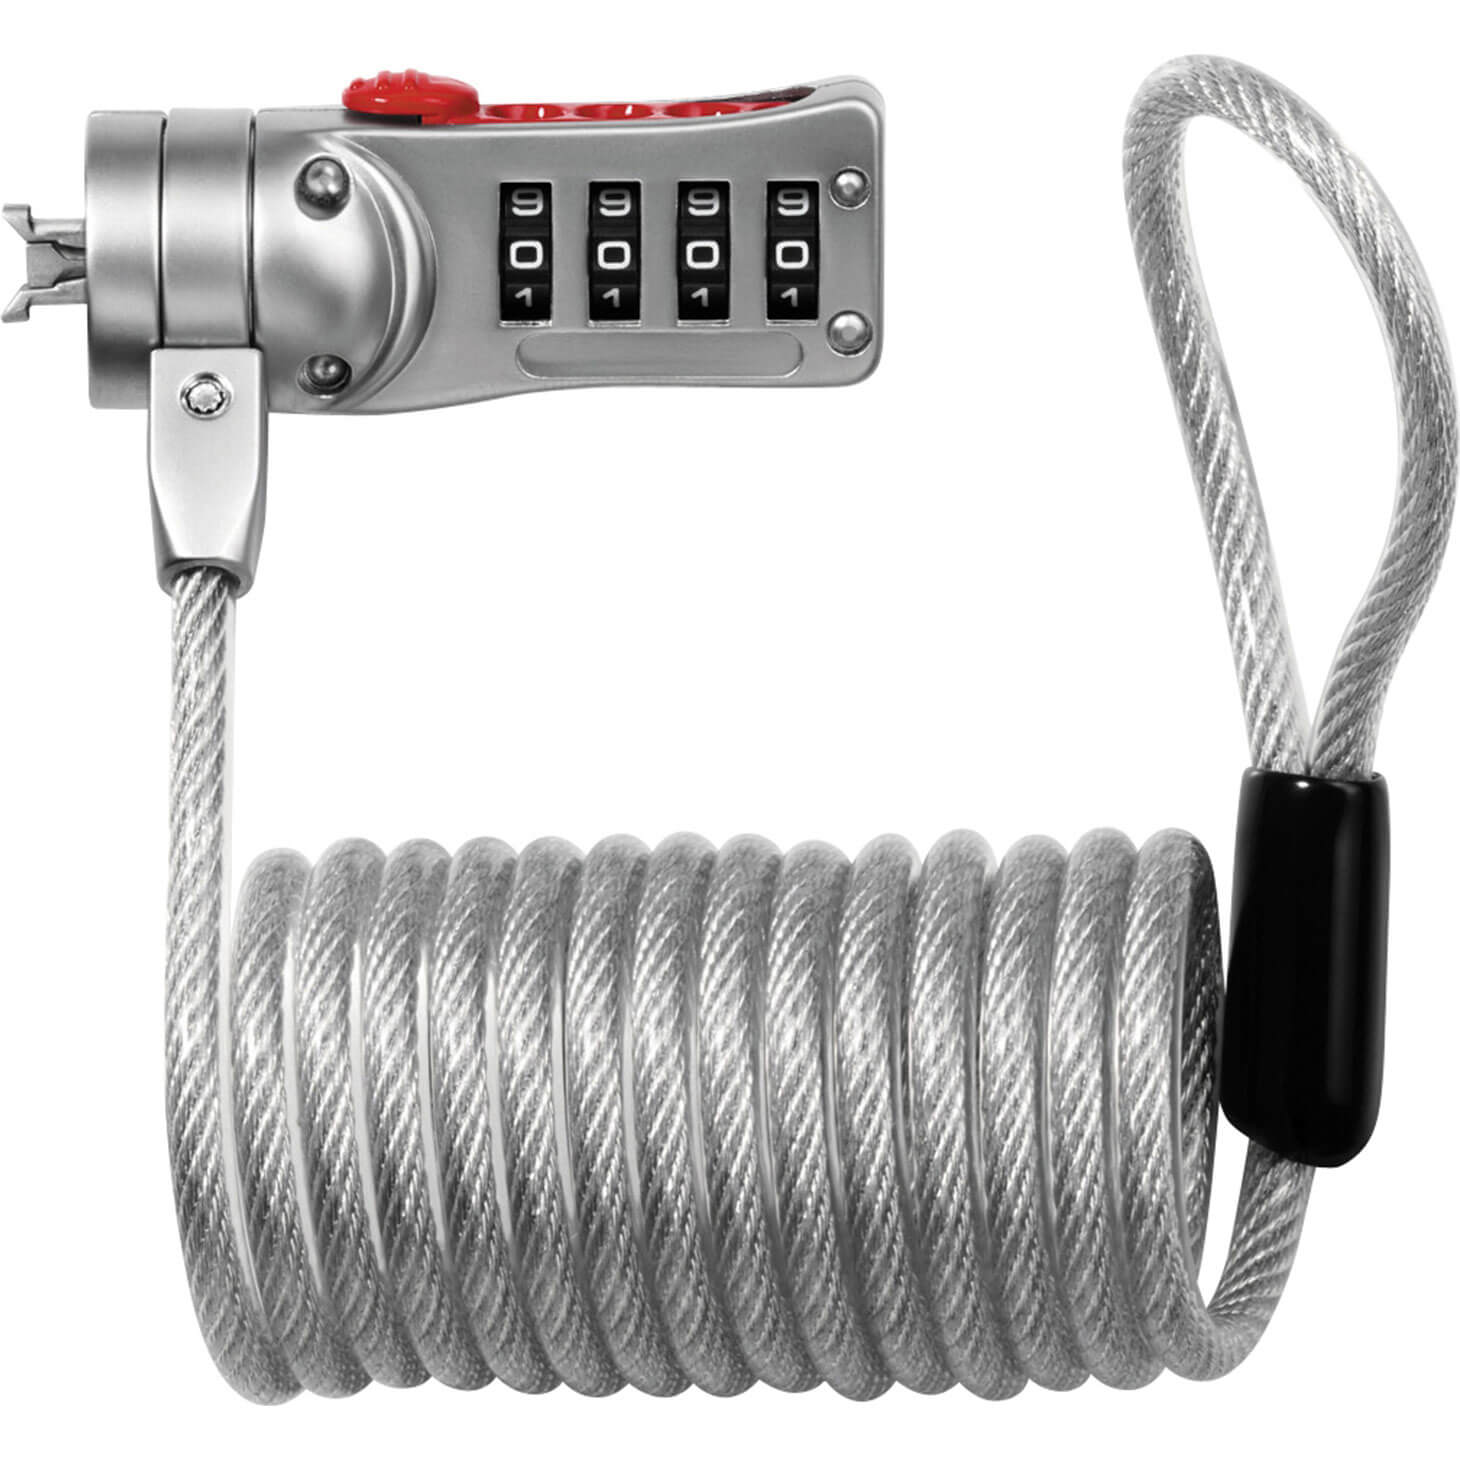 Image of Masterlock Combi Computer Cable Lock 5mm 1800mm